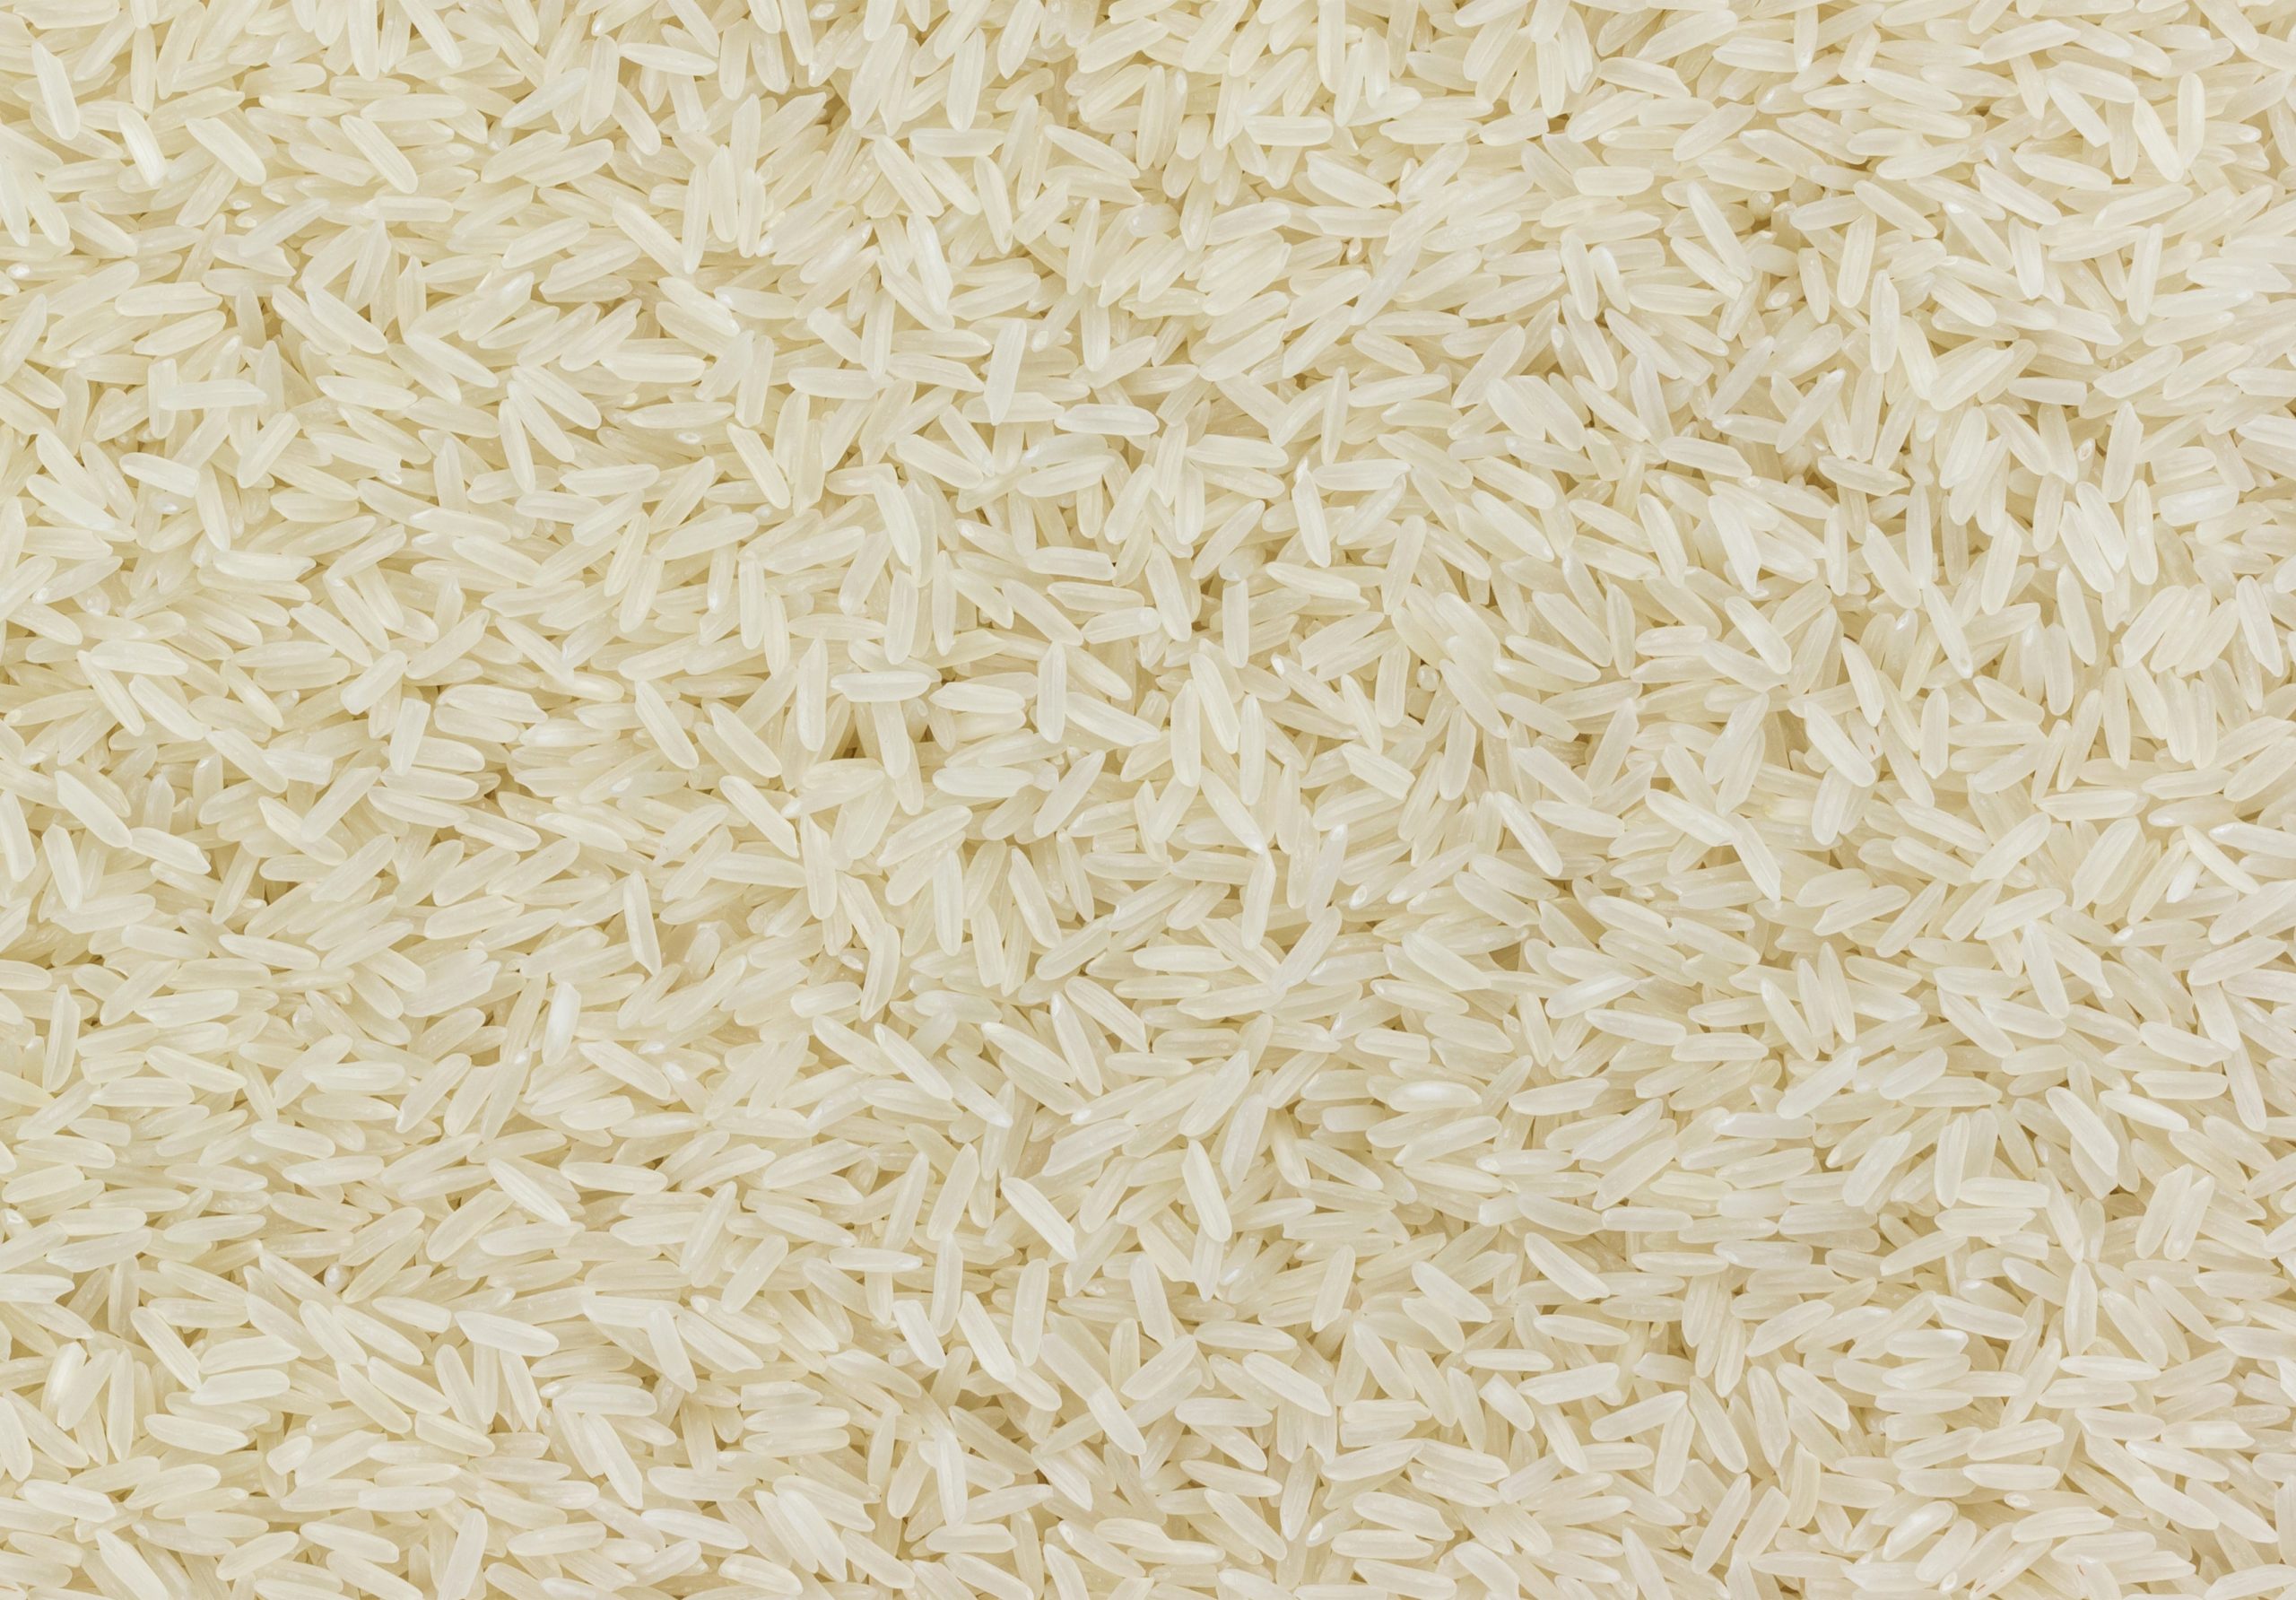 Basmati Biryani Rice – Long Grains & Good Quality